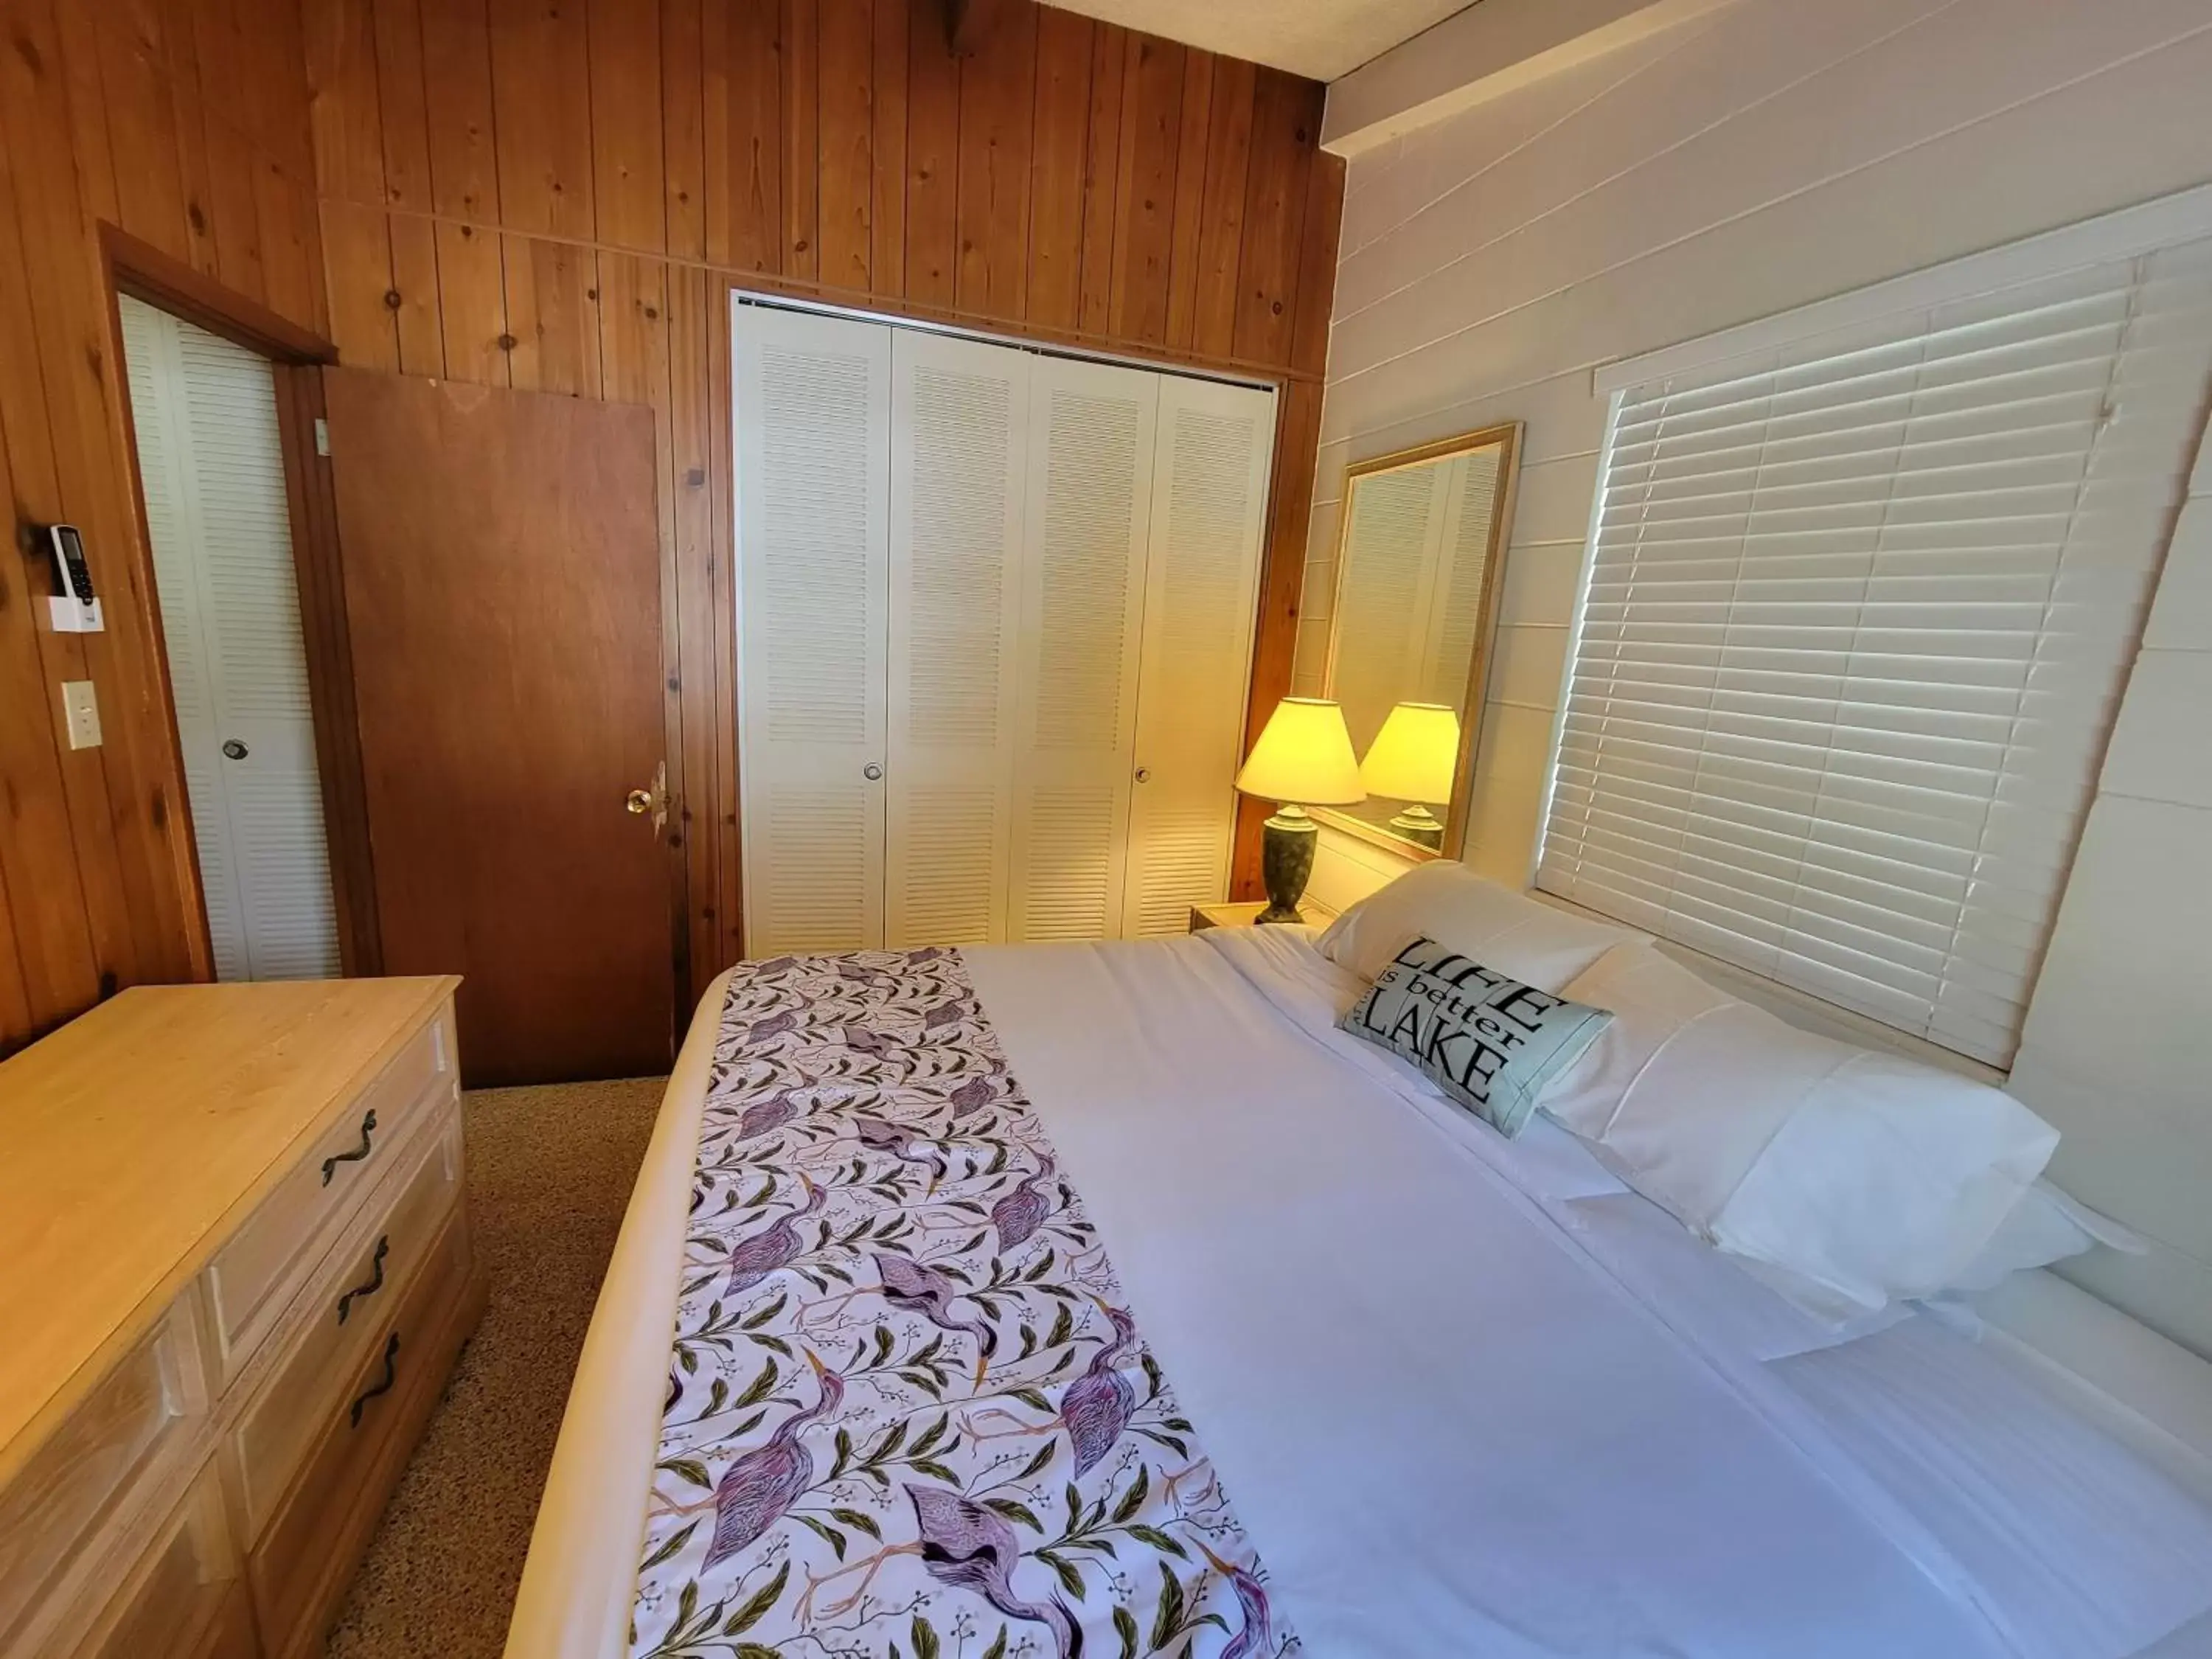 Bed in Tropical Marina & Resort on Lake Beresford